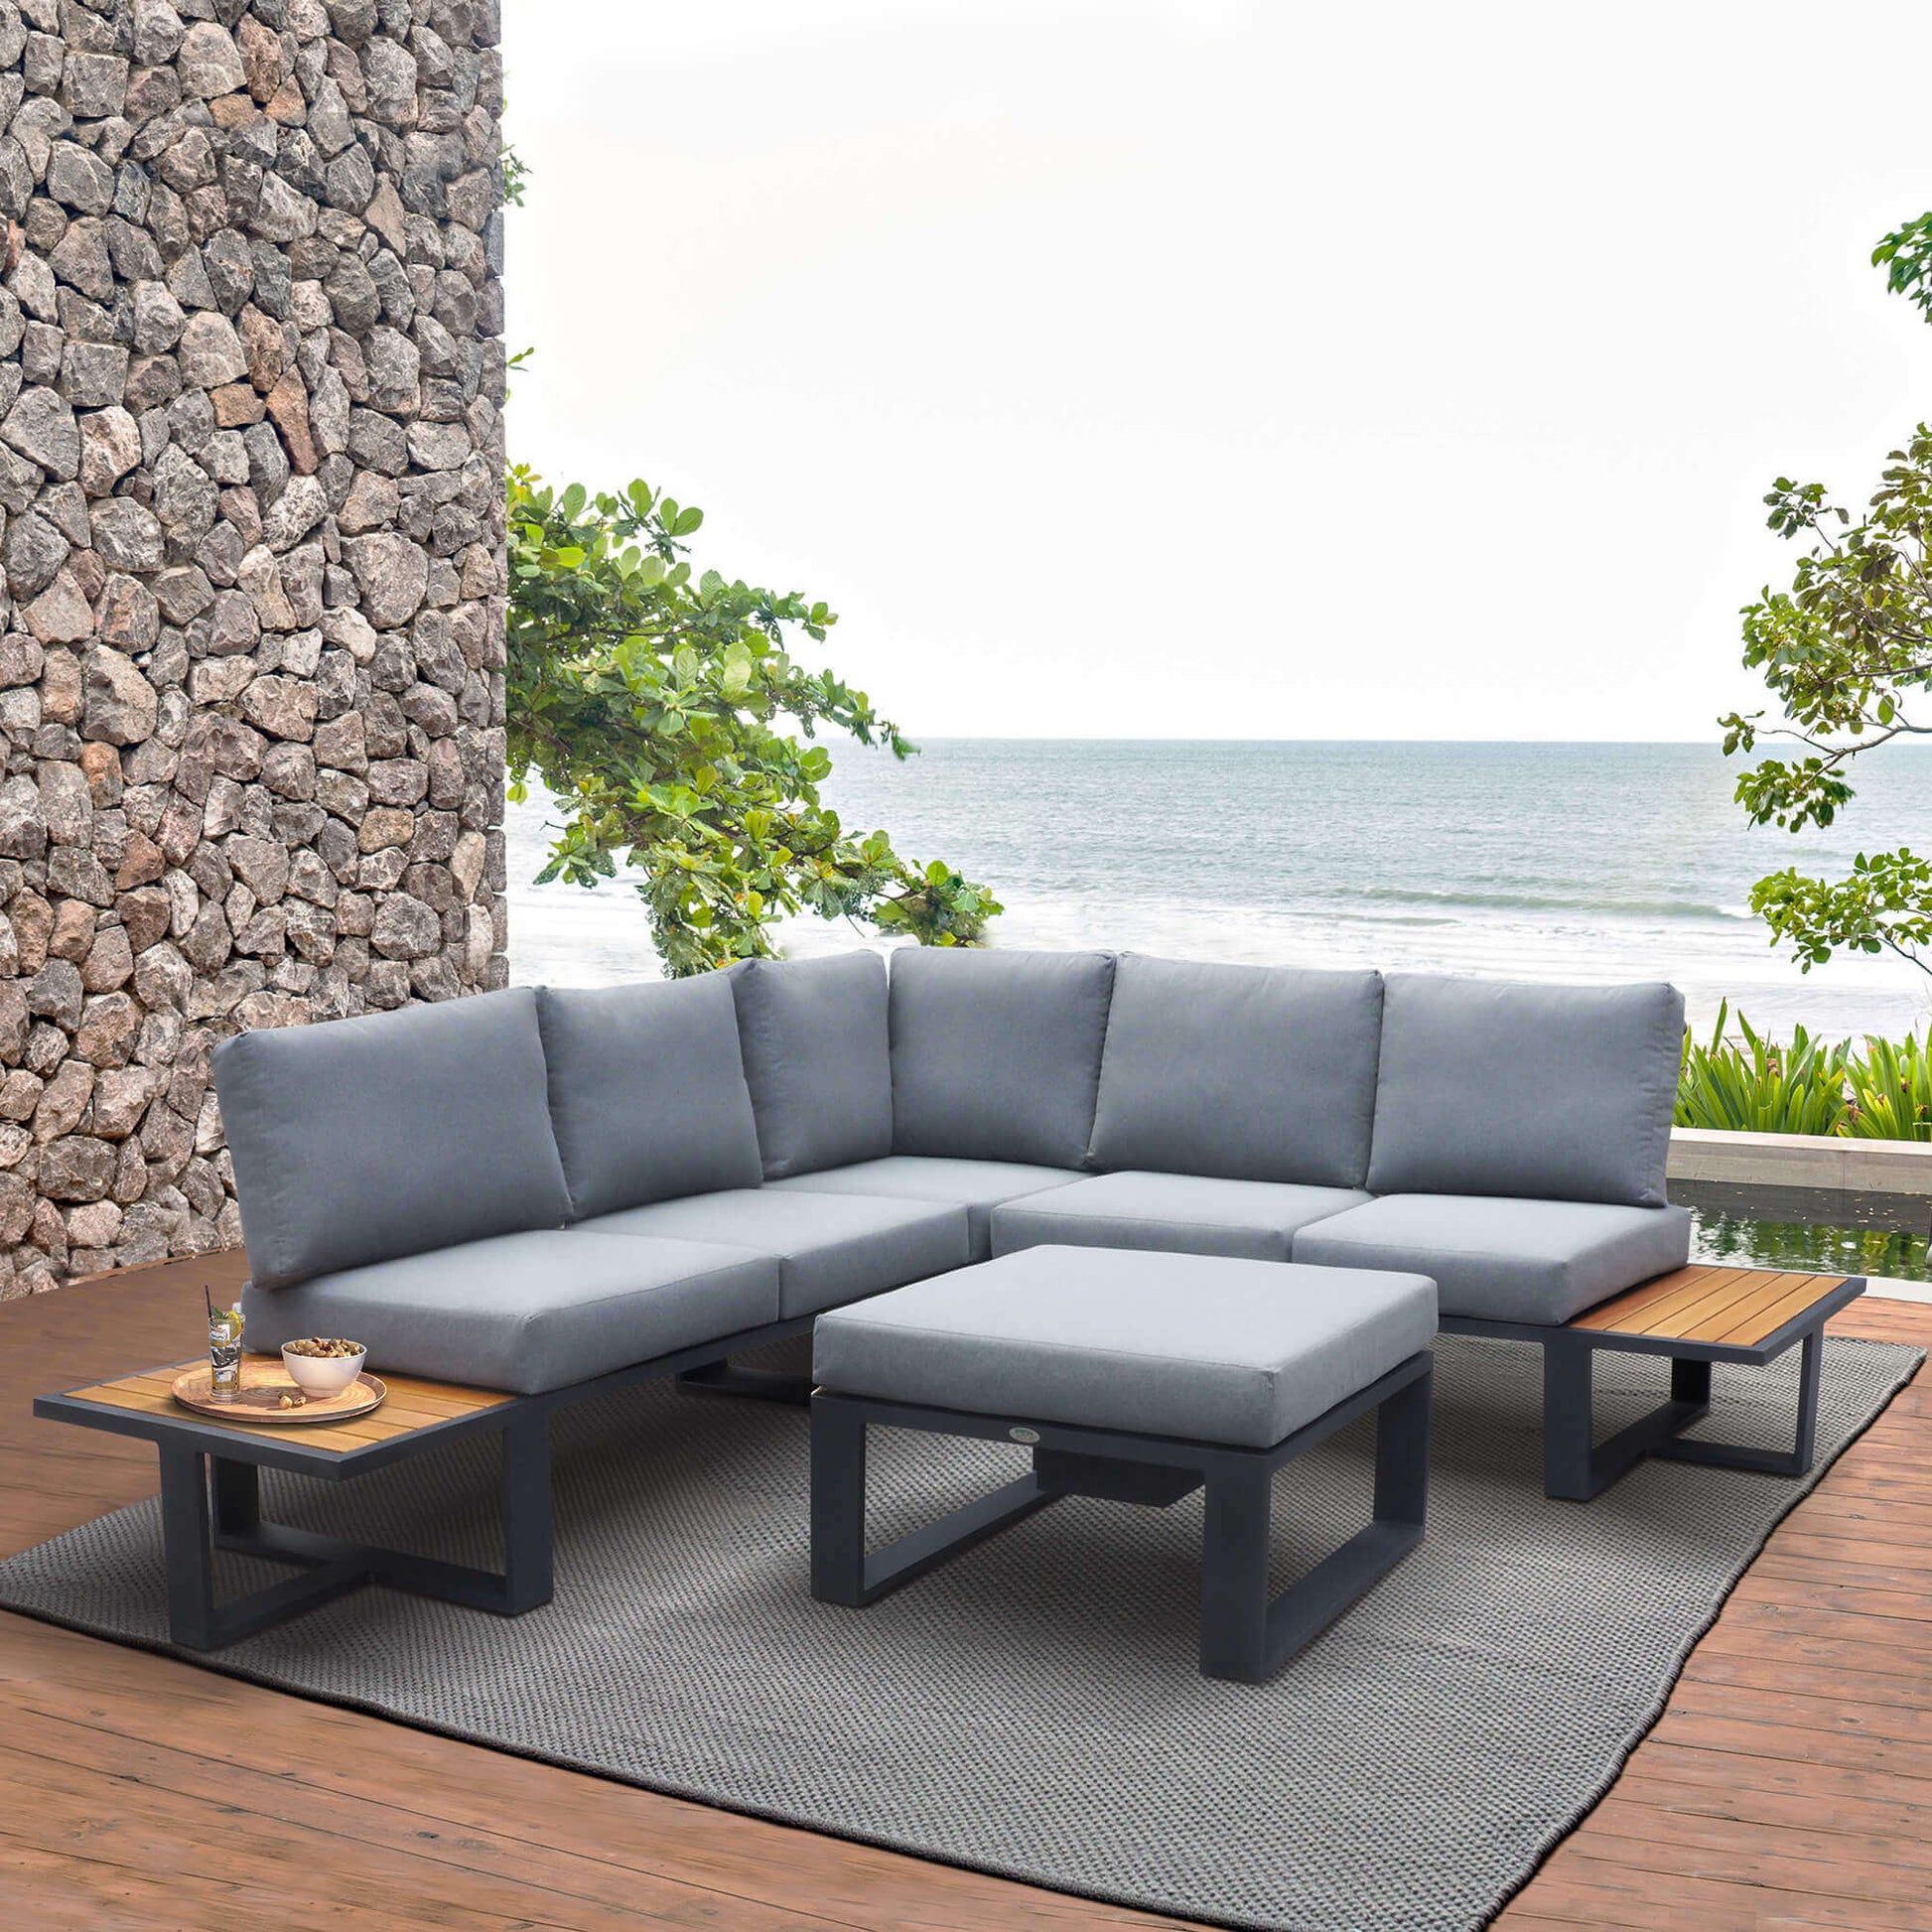 Arttoreal Aluminum Patio Sofa 3 Piece Outdoor Sectional Set, Outdoor Furniture with Tea Table